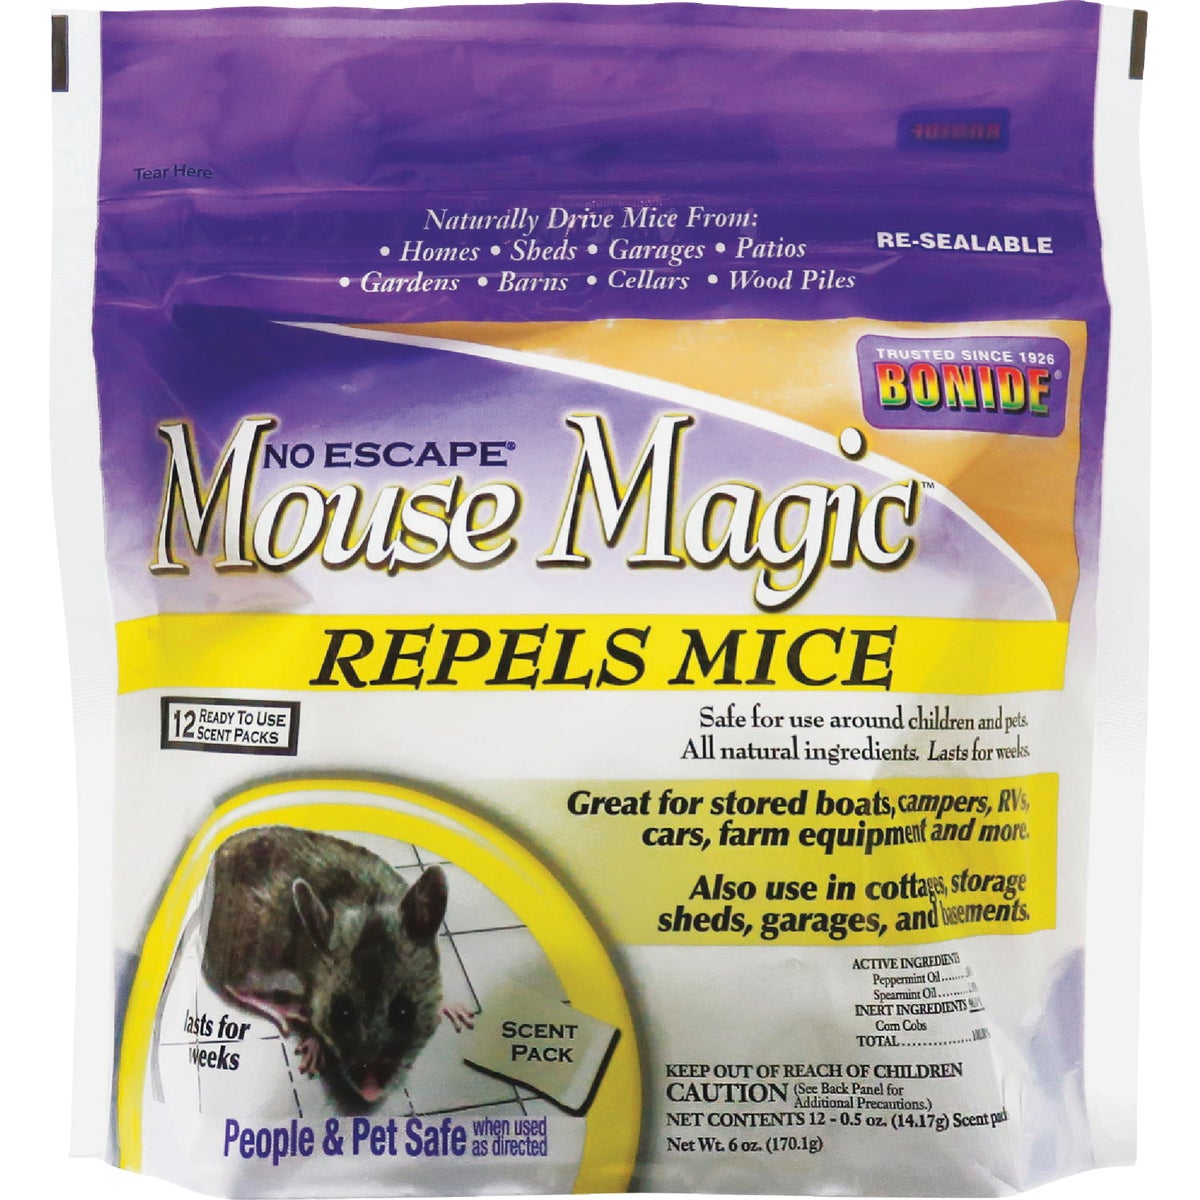 Bonide Mouse Magic 6 Oz. Granular Mouse Repellent (12-Pack)